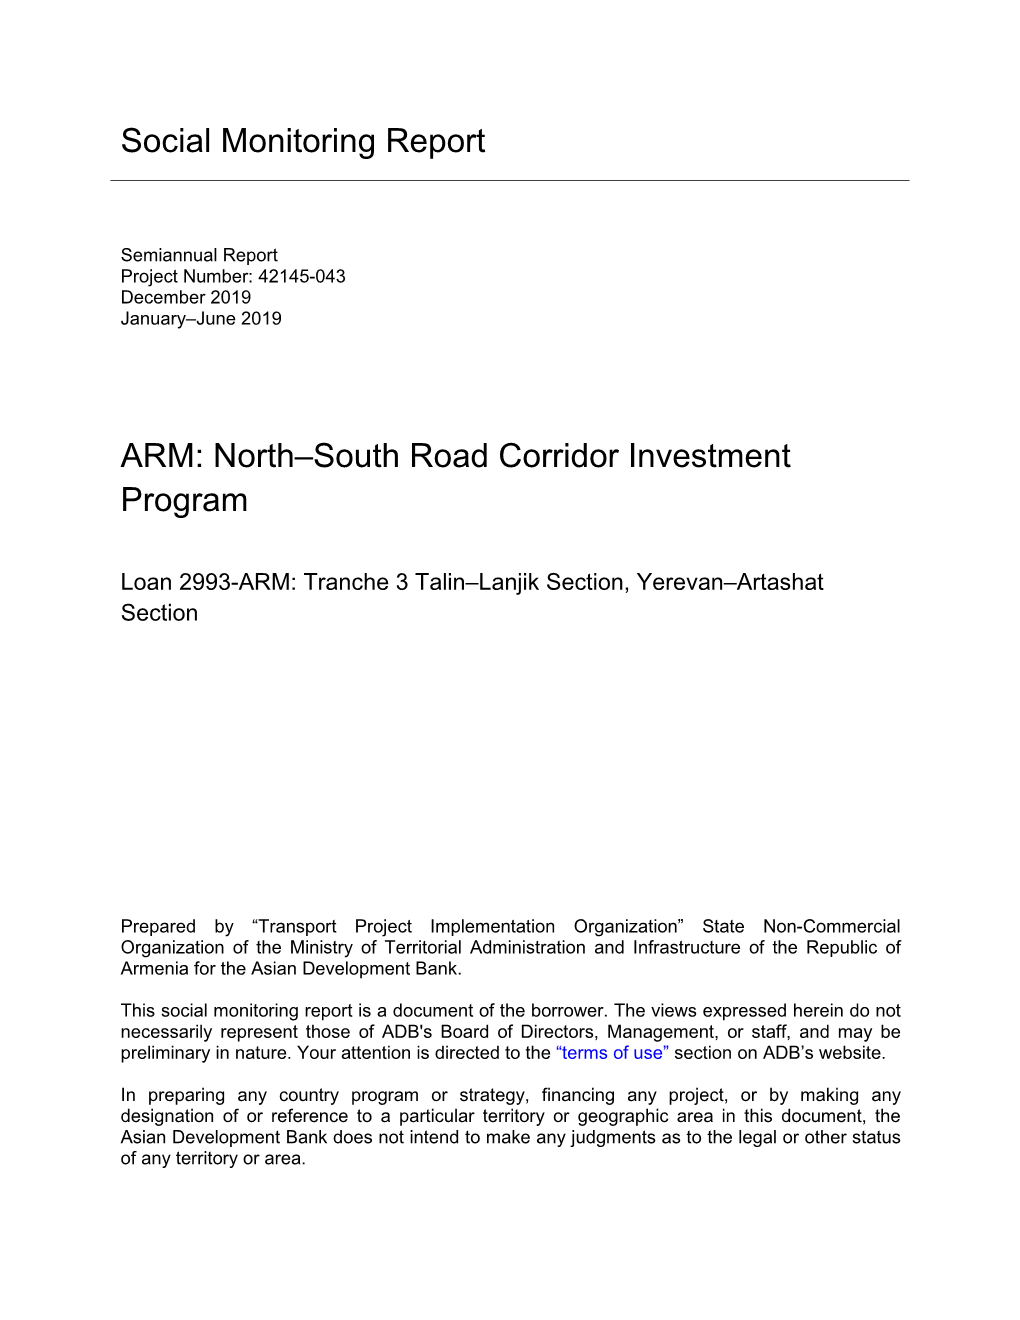 North-South Road Corridor Investment Program – Tranche 3: Talin–Lanjik